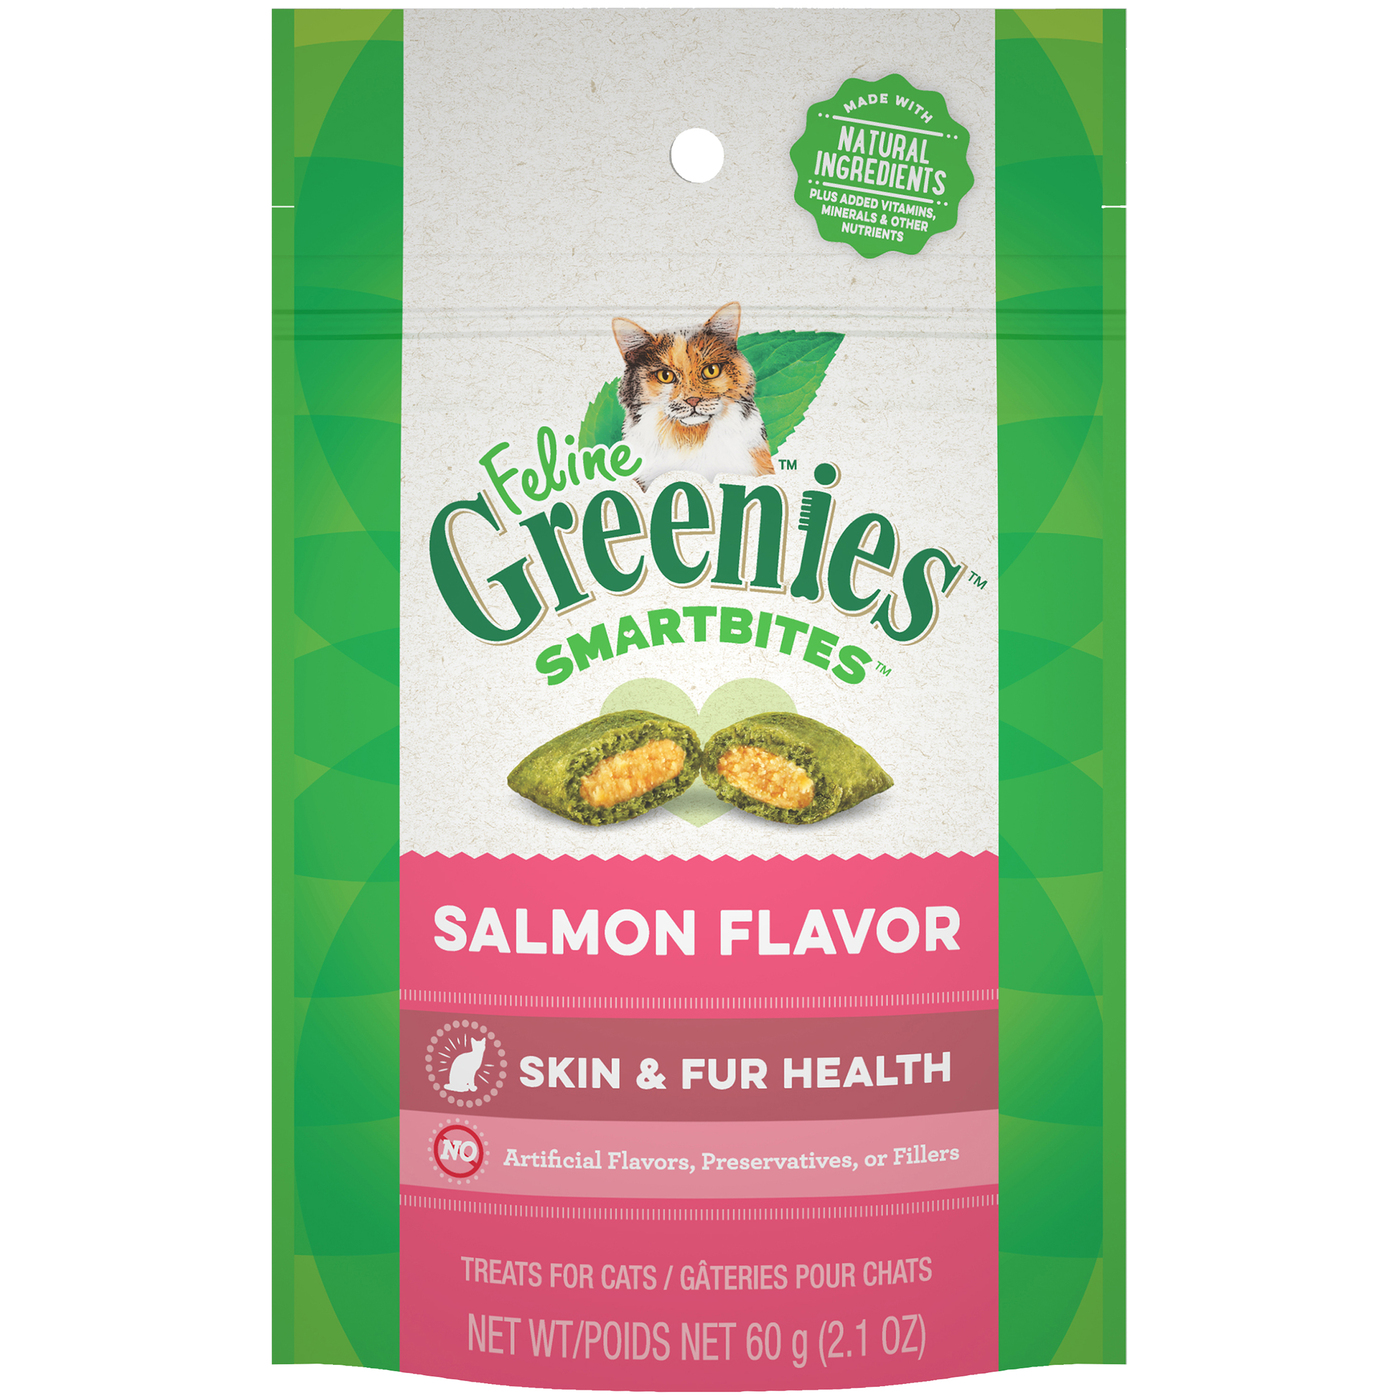 Feline Greenies Smartbites Skin & Fur Health Salmon Flavor Cat Treats 2.1